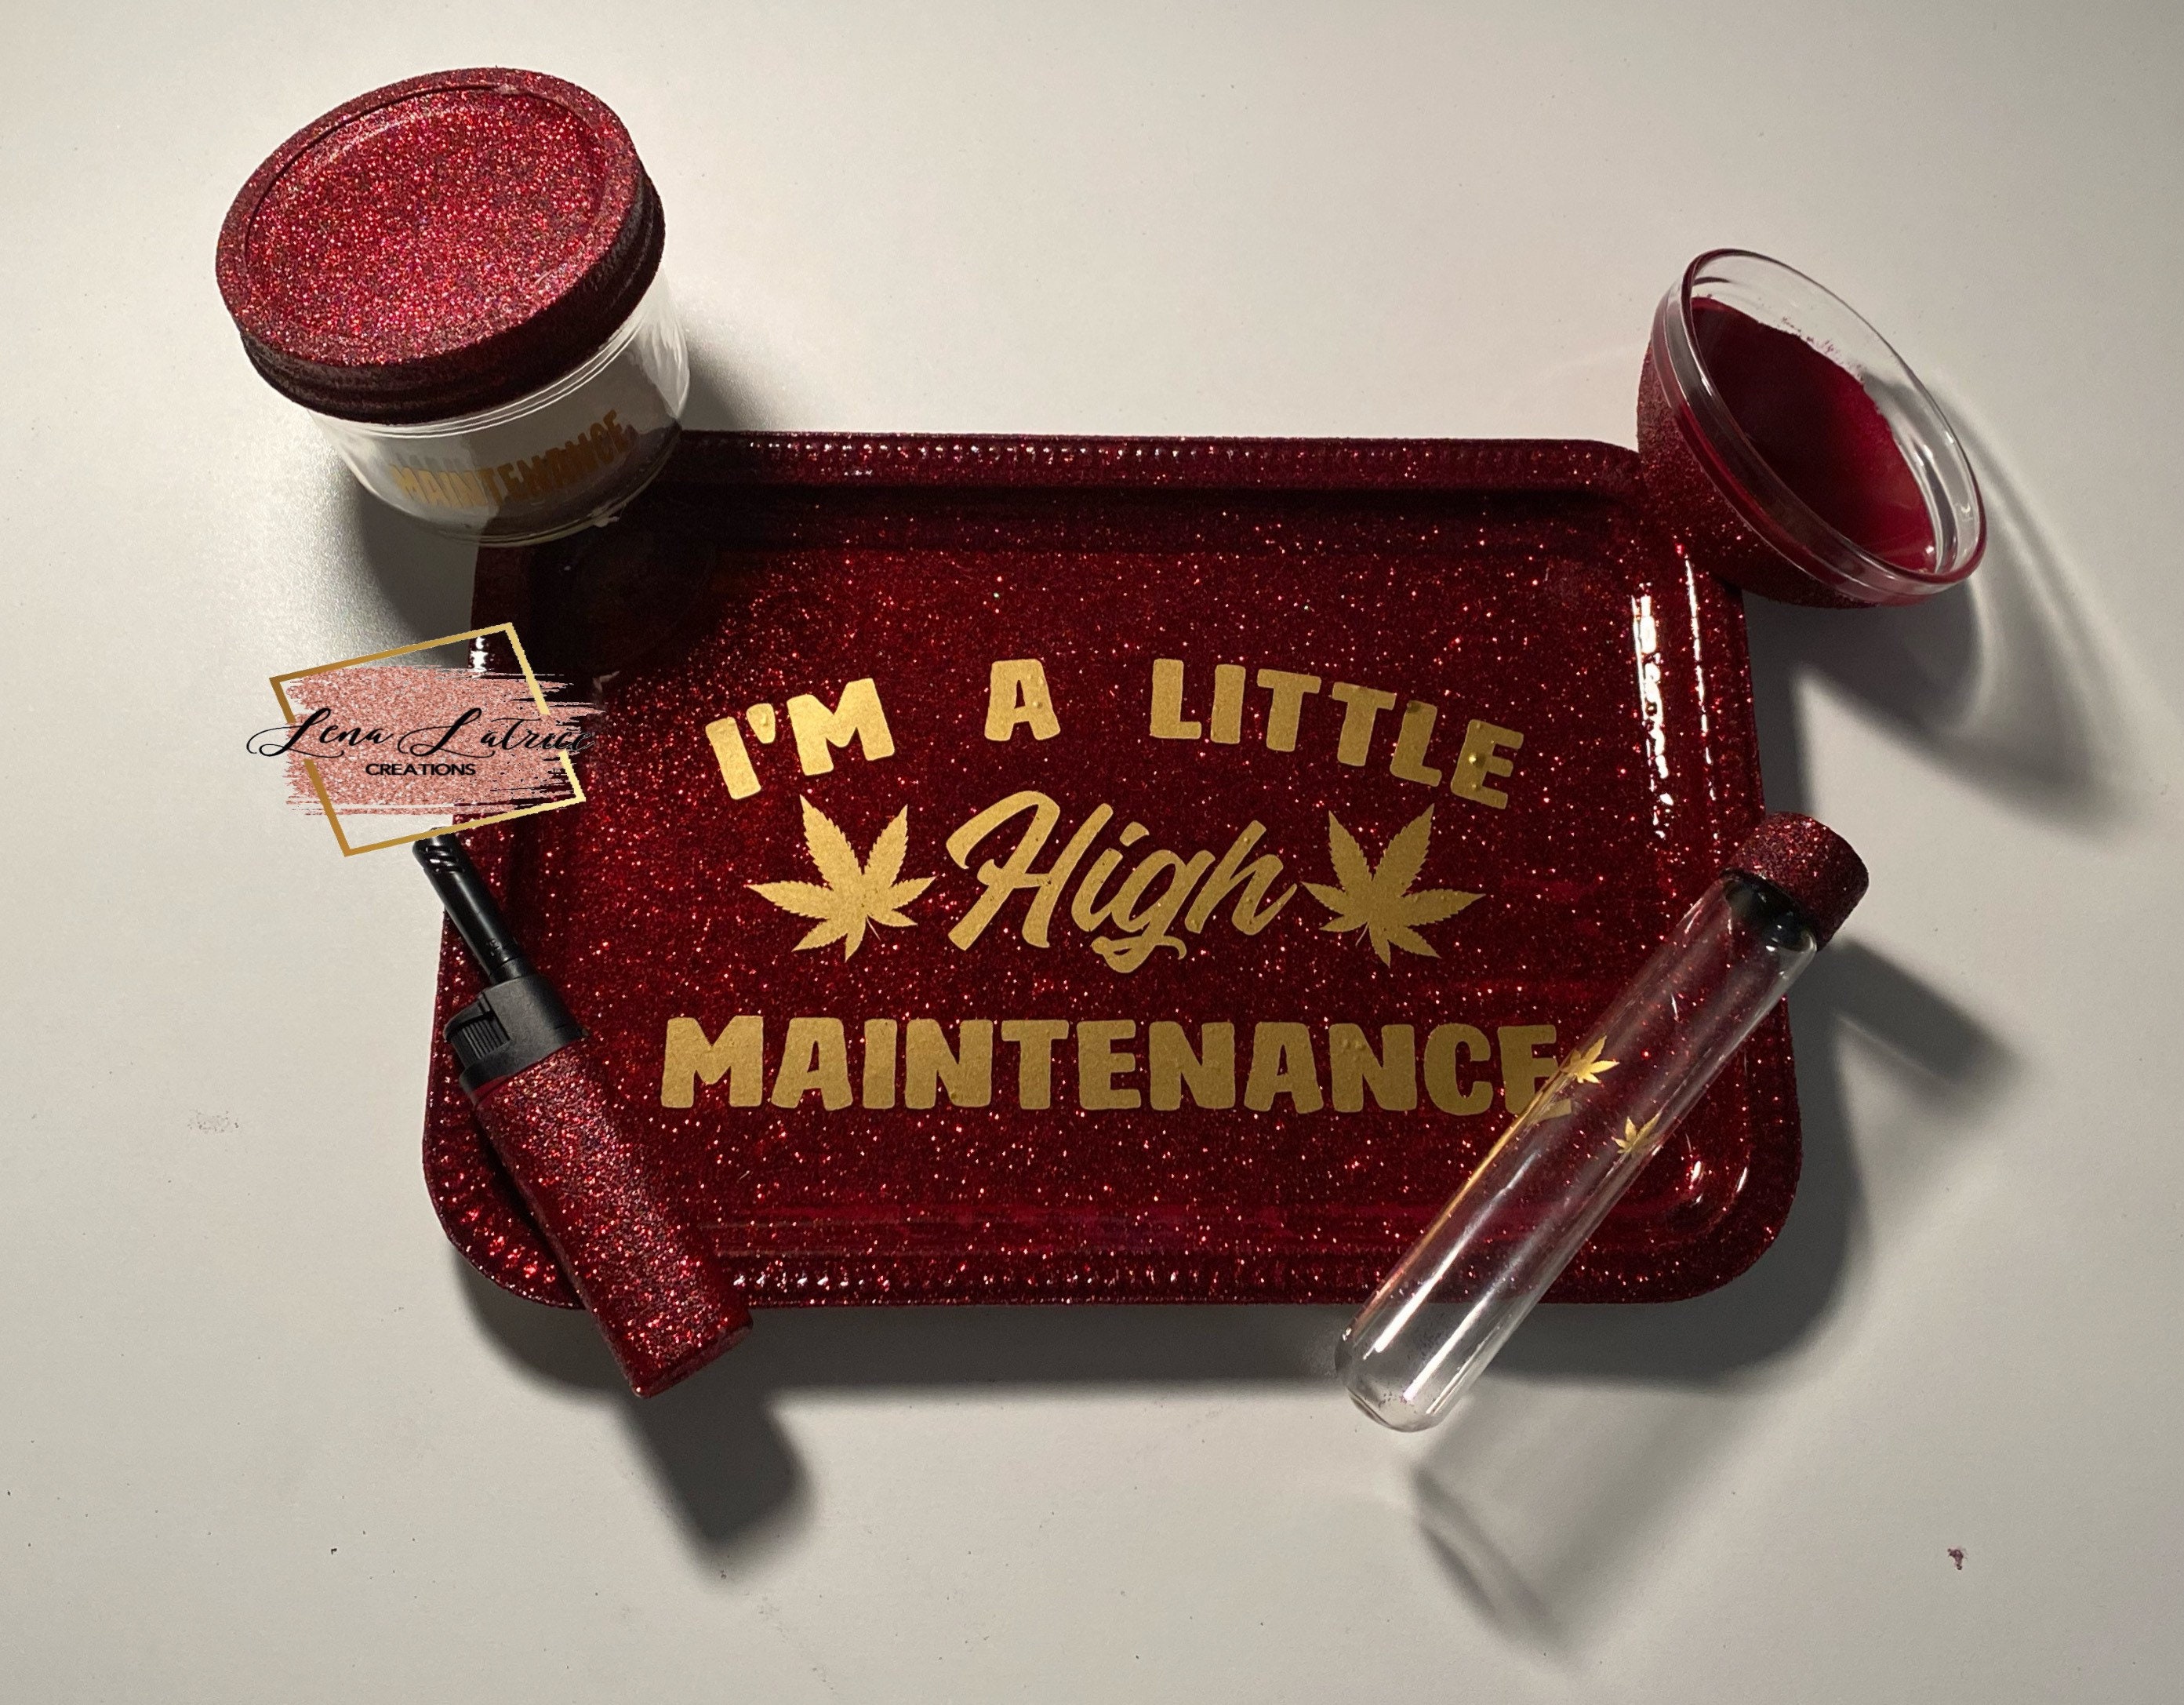 Hart & Hive  Luxury Weed Smoking Leather Rolling Kit